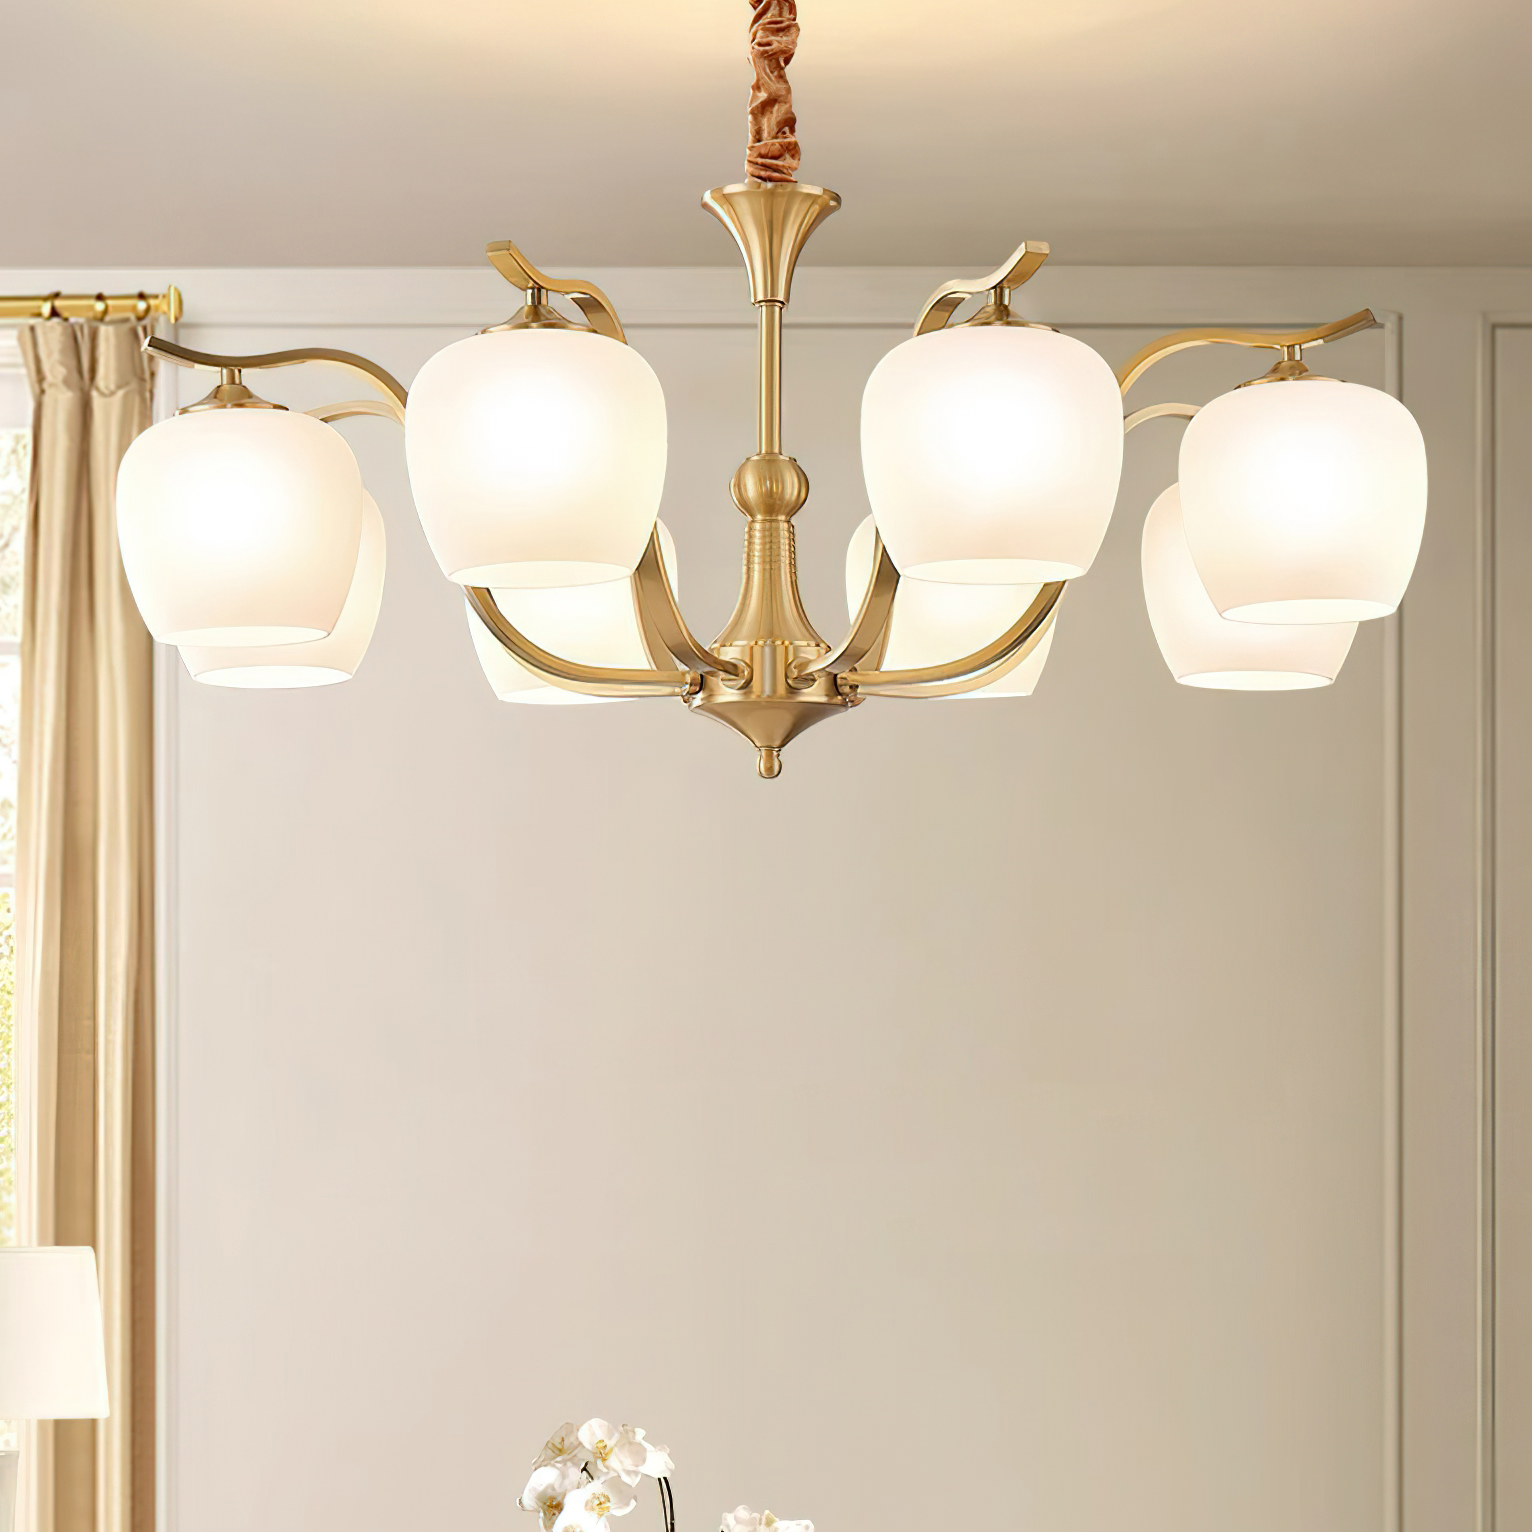 Brass chandelier - Mooielight